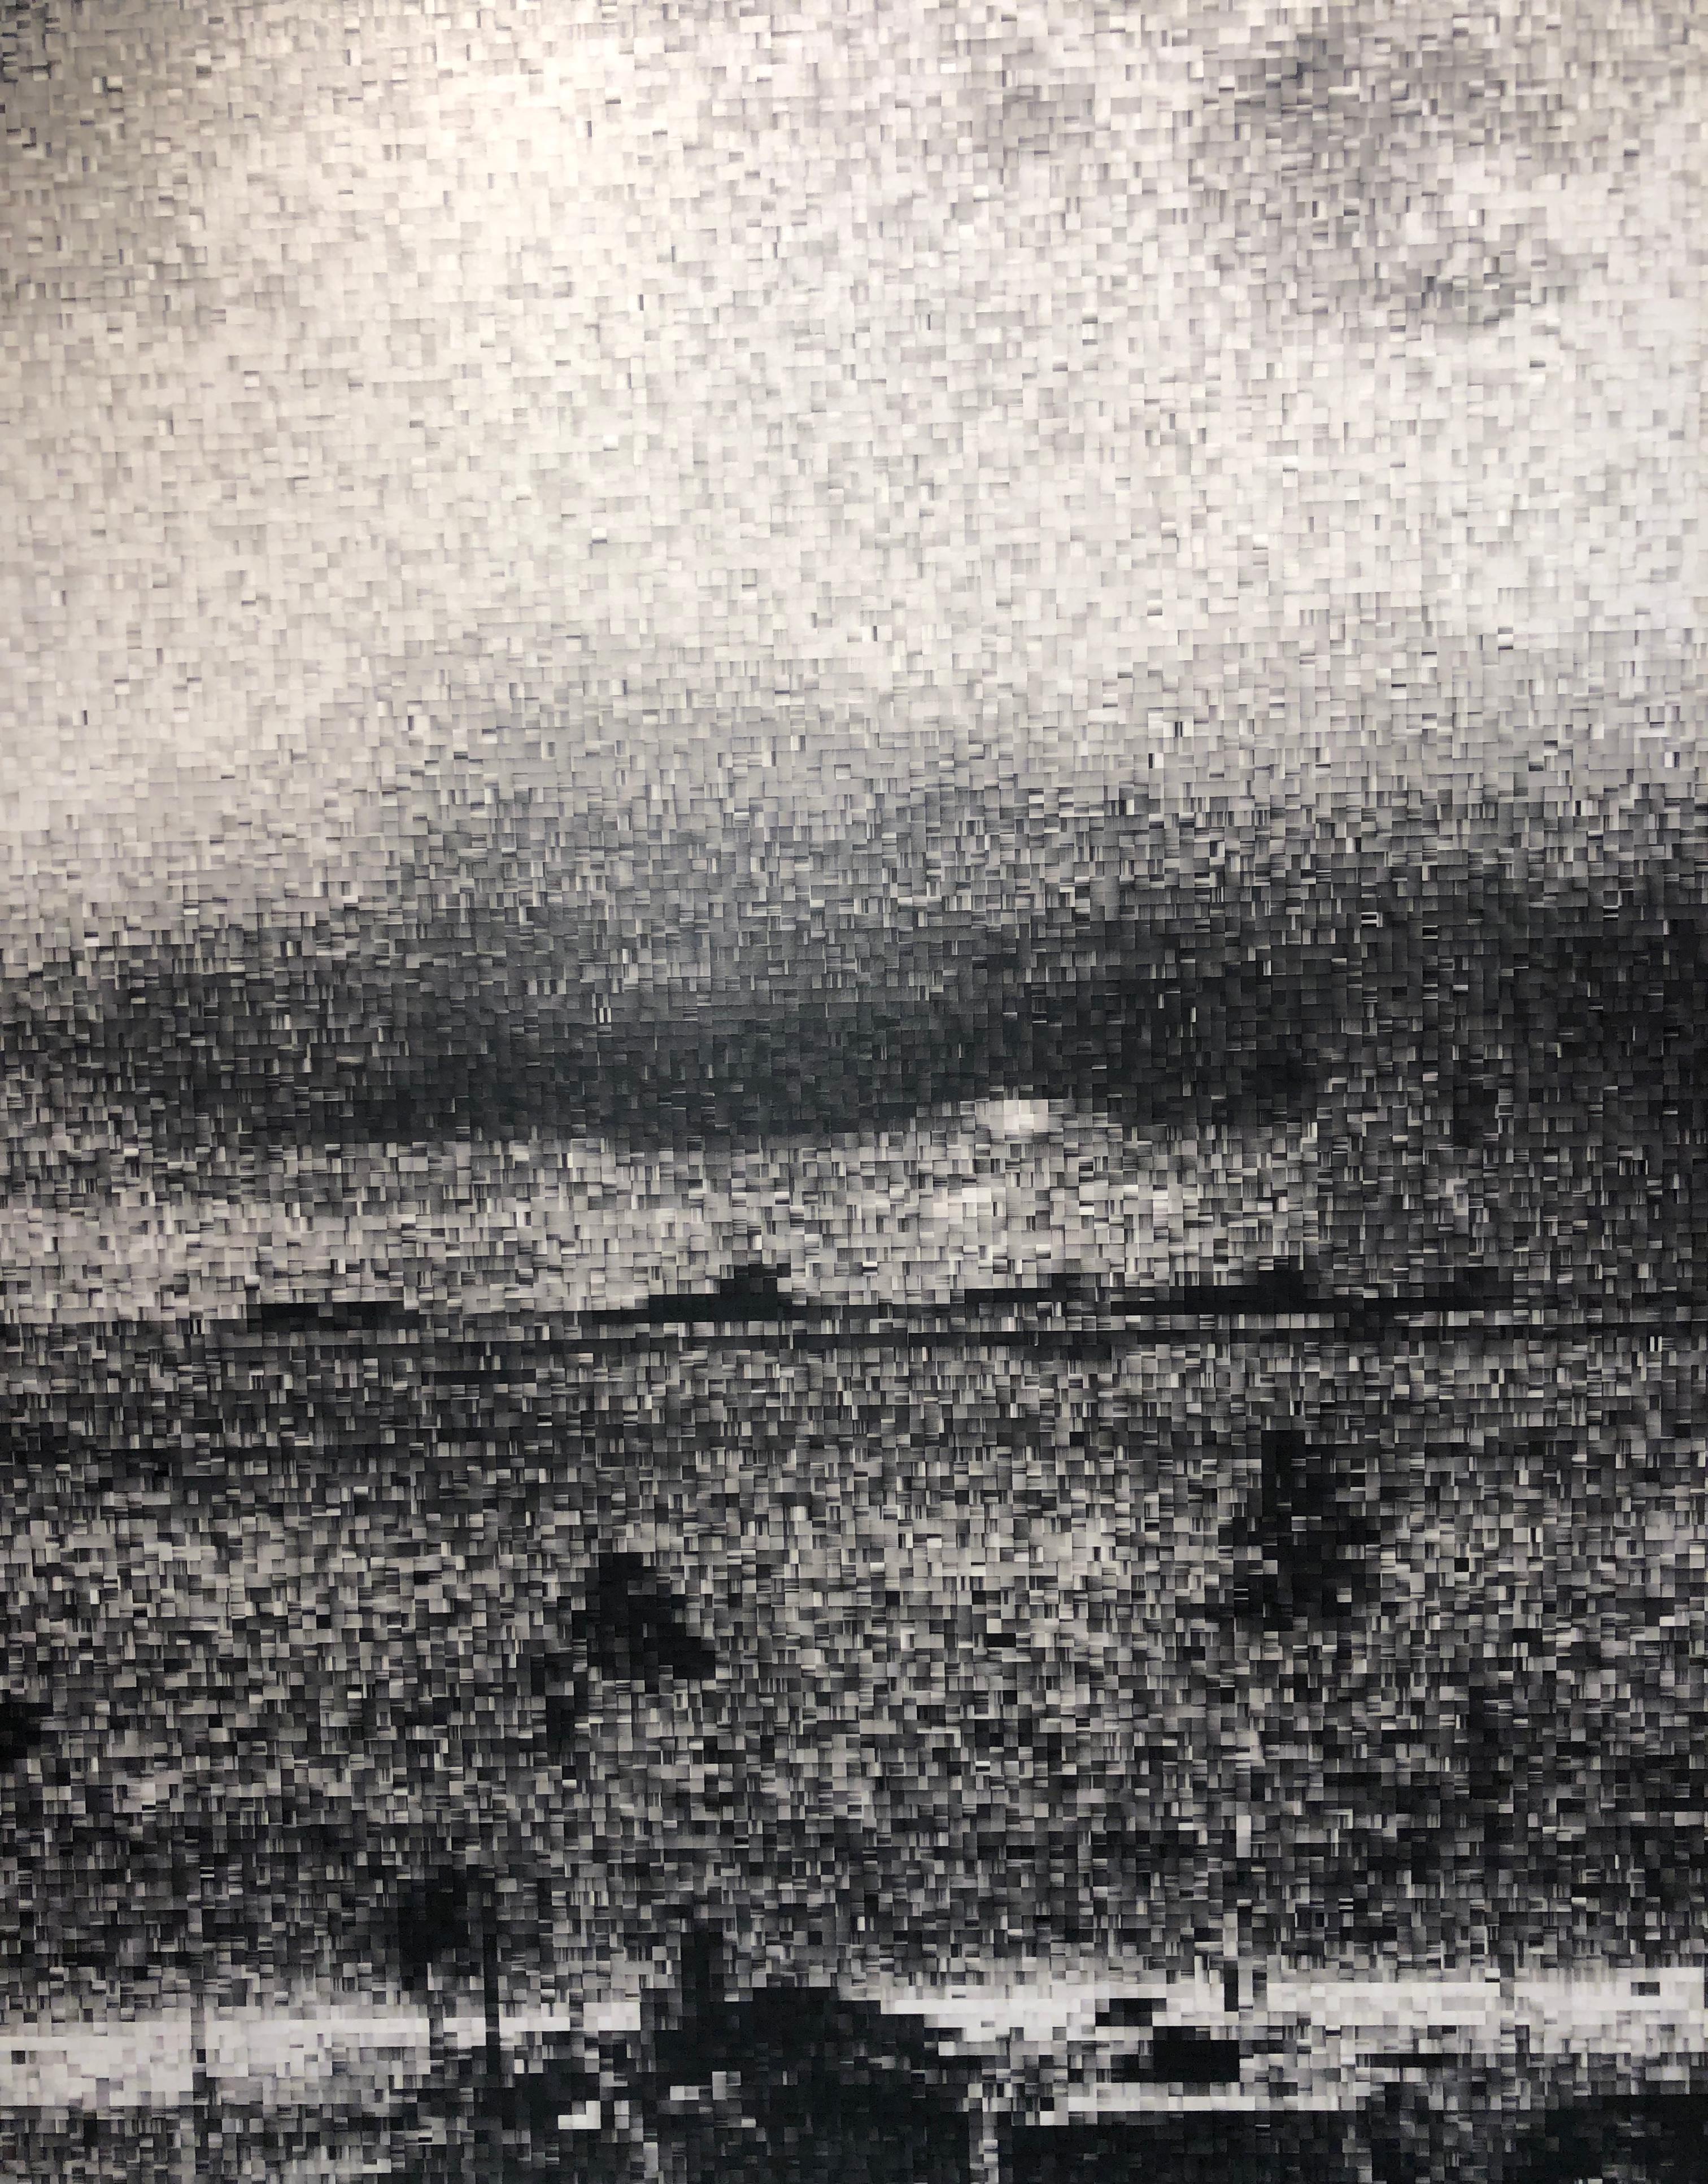 Operation Crossroads: Baker, Pixelated Image of Declassified Military Testing - Gray Figurative Print by Jan Pieter Fokkens